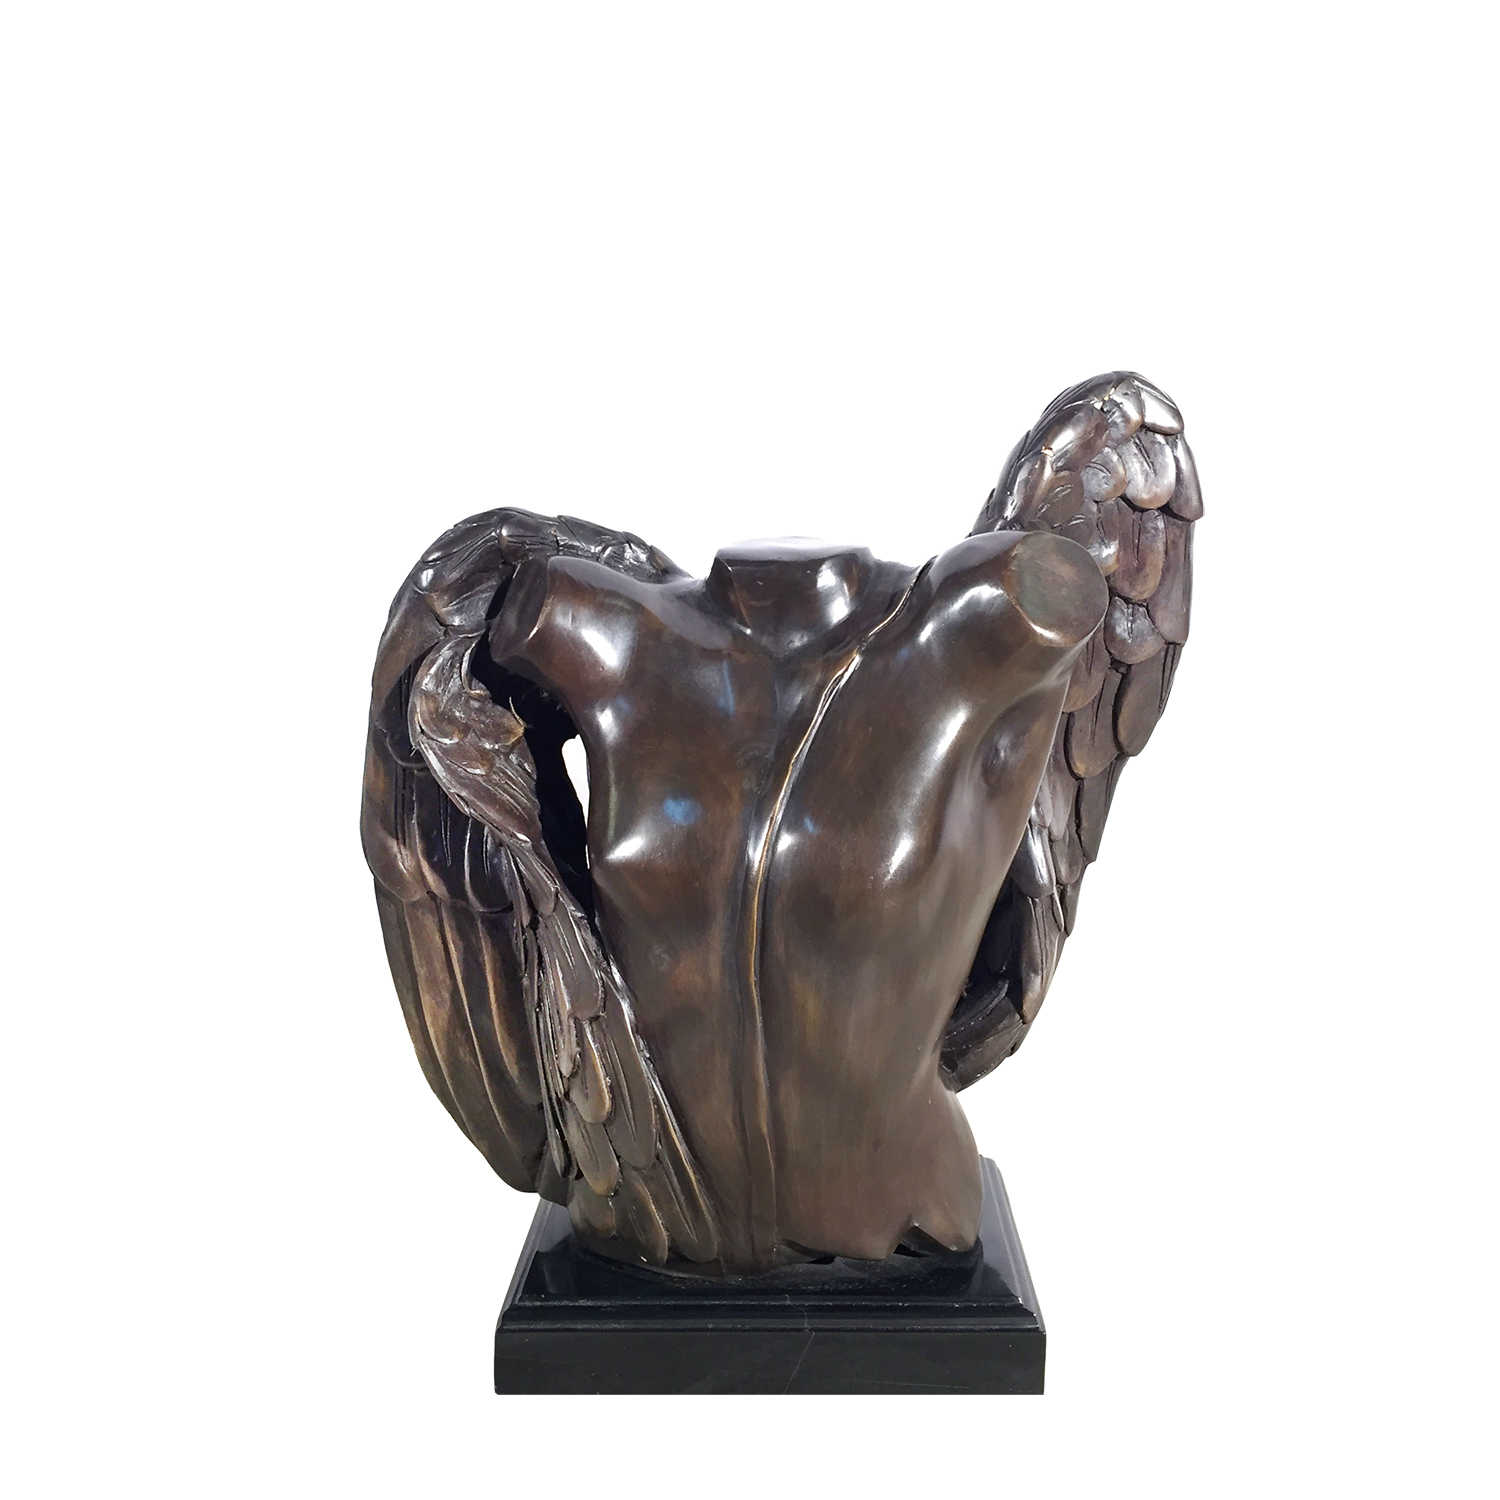 Cast Bronze Religious Sculptures Metropolitan Galleries Statues and Fountains Bronze